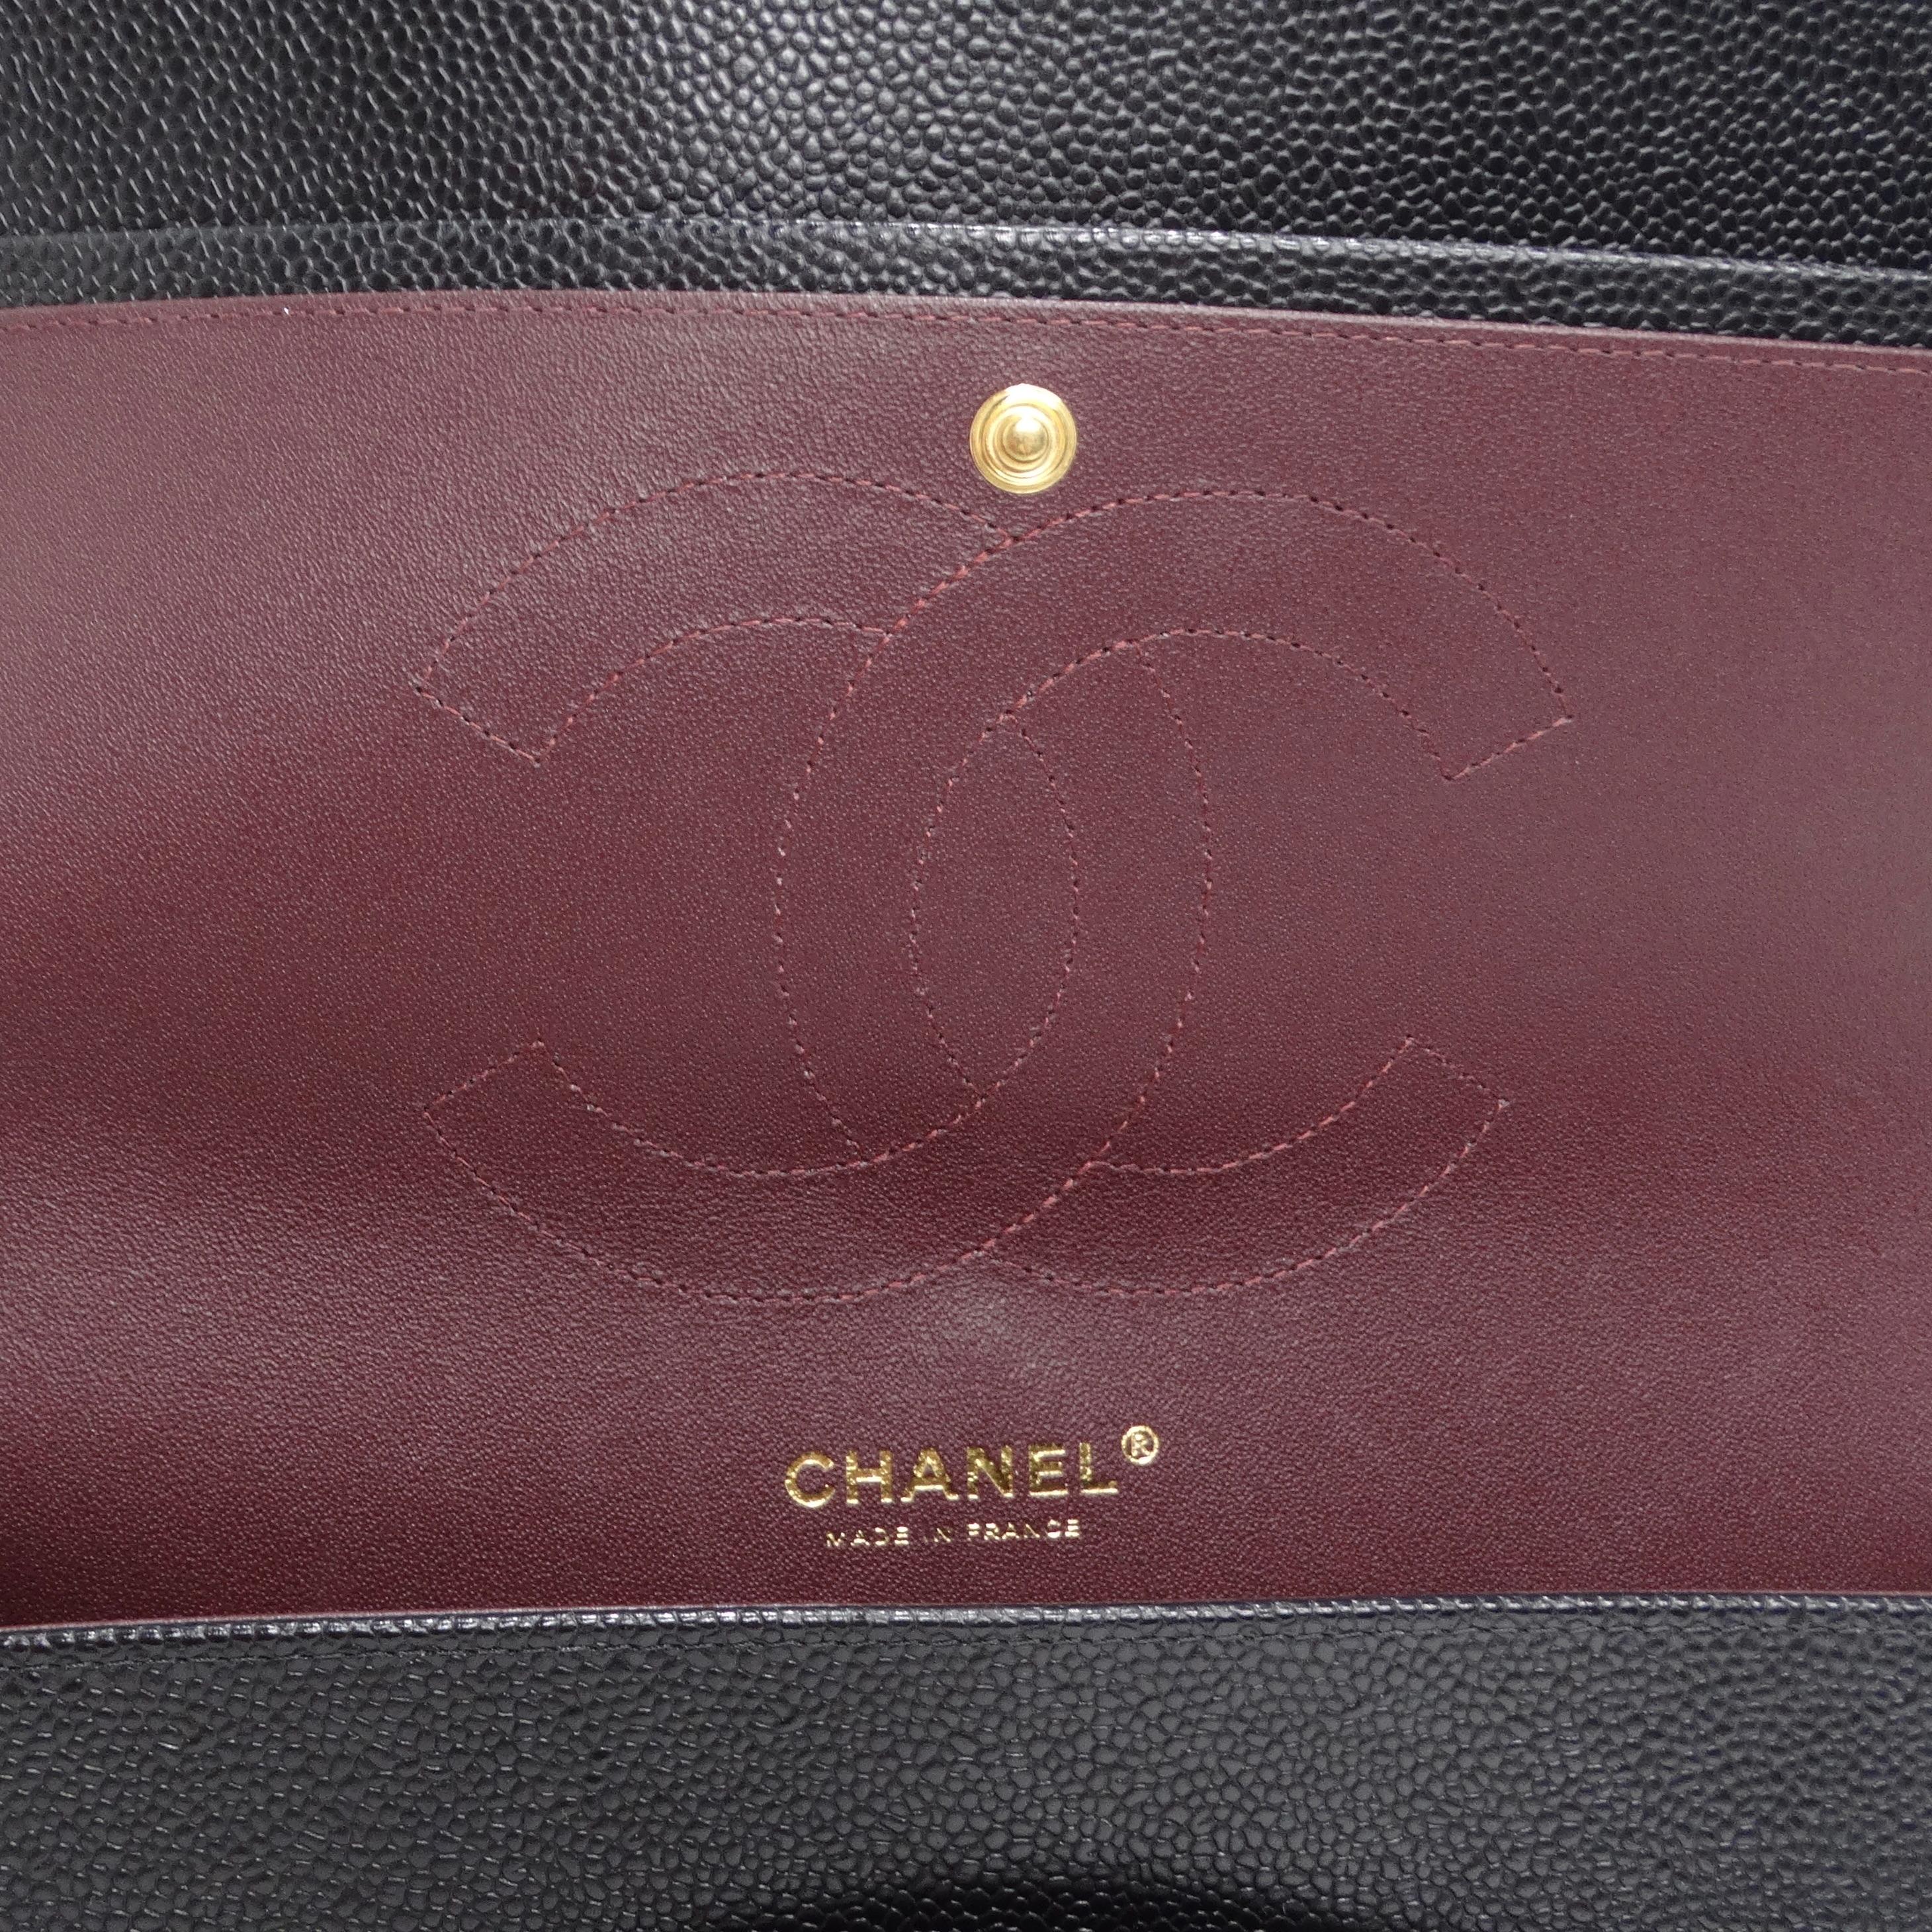 Chanel Large Classic Quilted Caviar Handbag Black/Burgundy 11